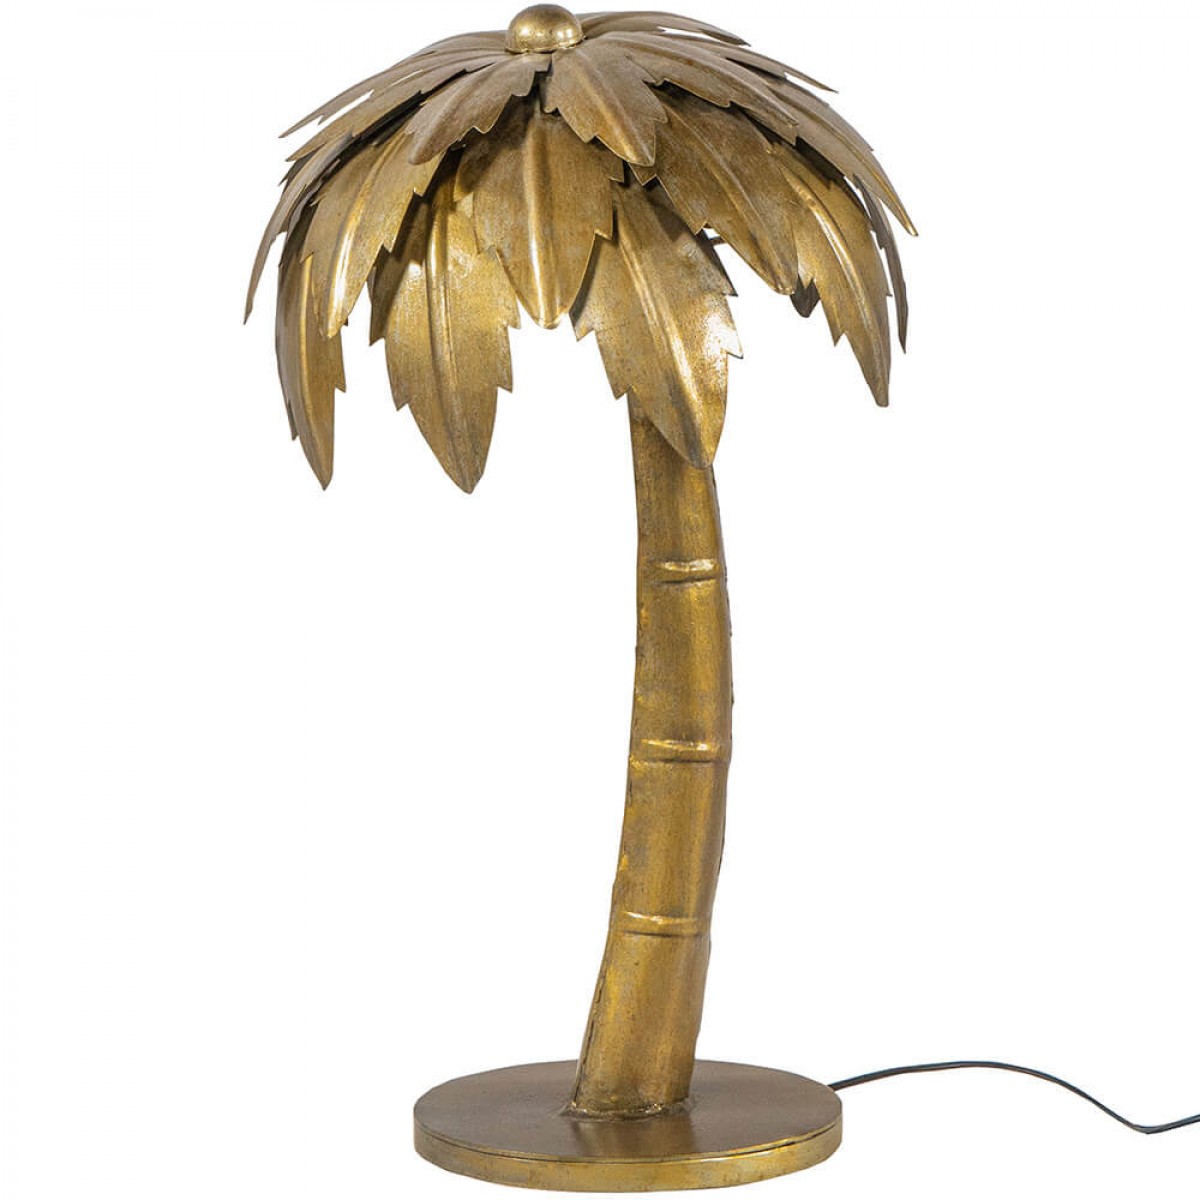 Palm μεταλλικό επιτραπέζιο φωτιστικό με σχήμα φοίνικα σε χρυσή μπρούτζινη απόχρωση 35x35x70 εκ